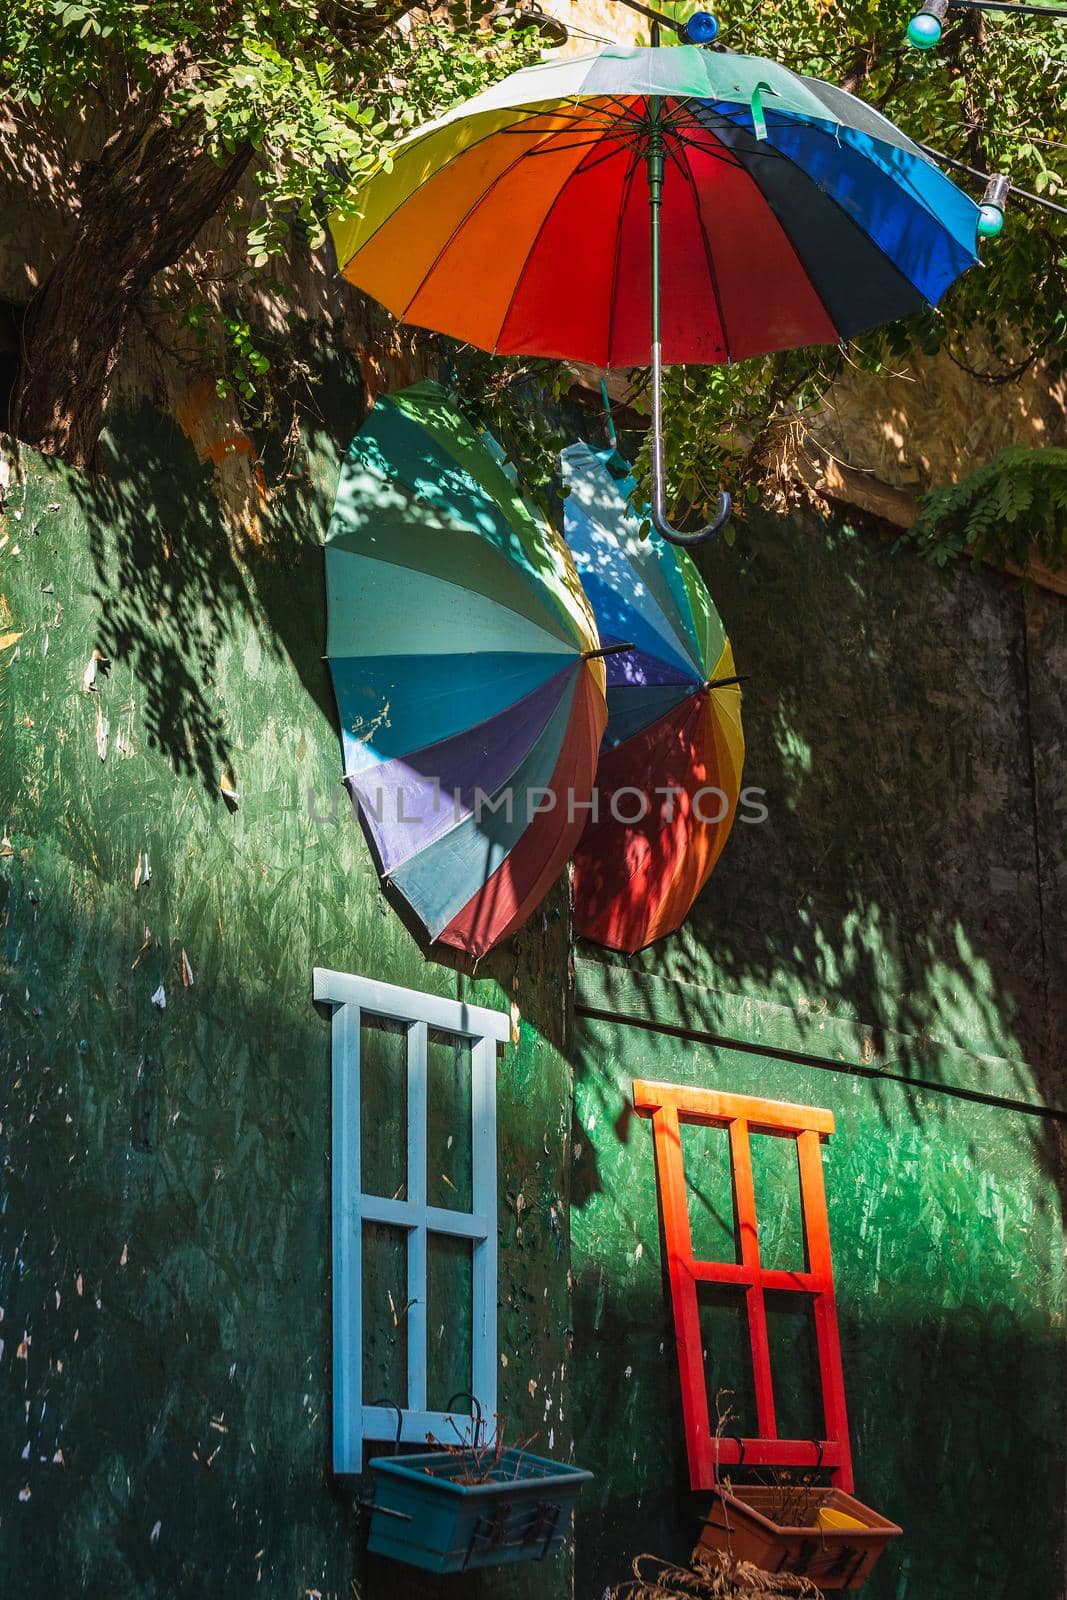 Multicolored umbrellas hang overhead in the street near Galata Tower.